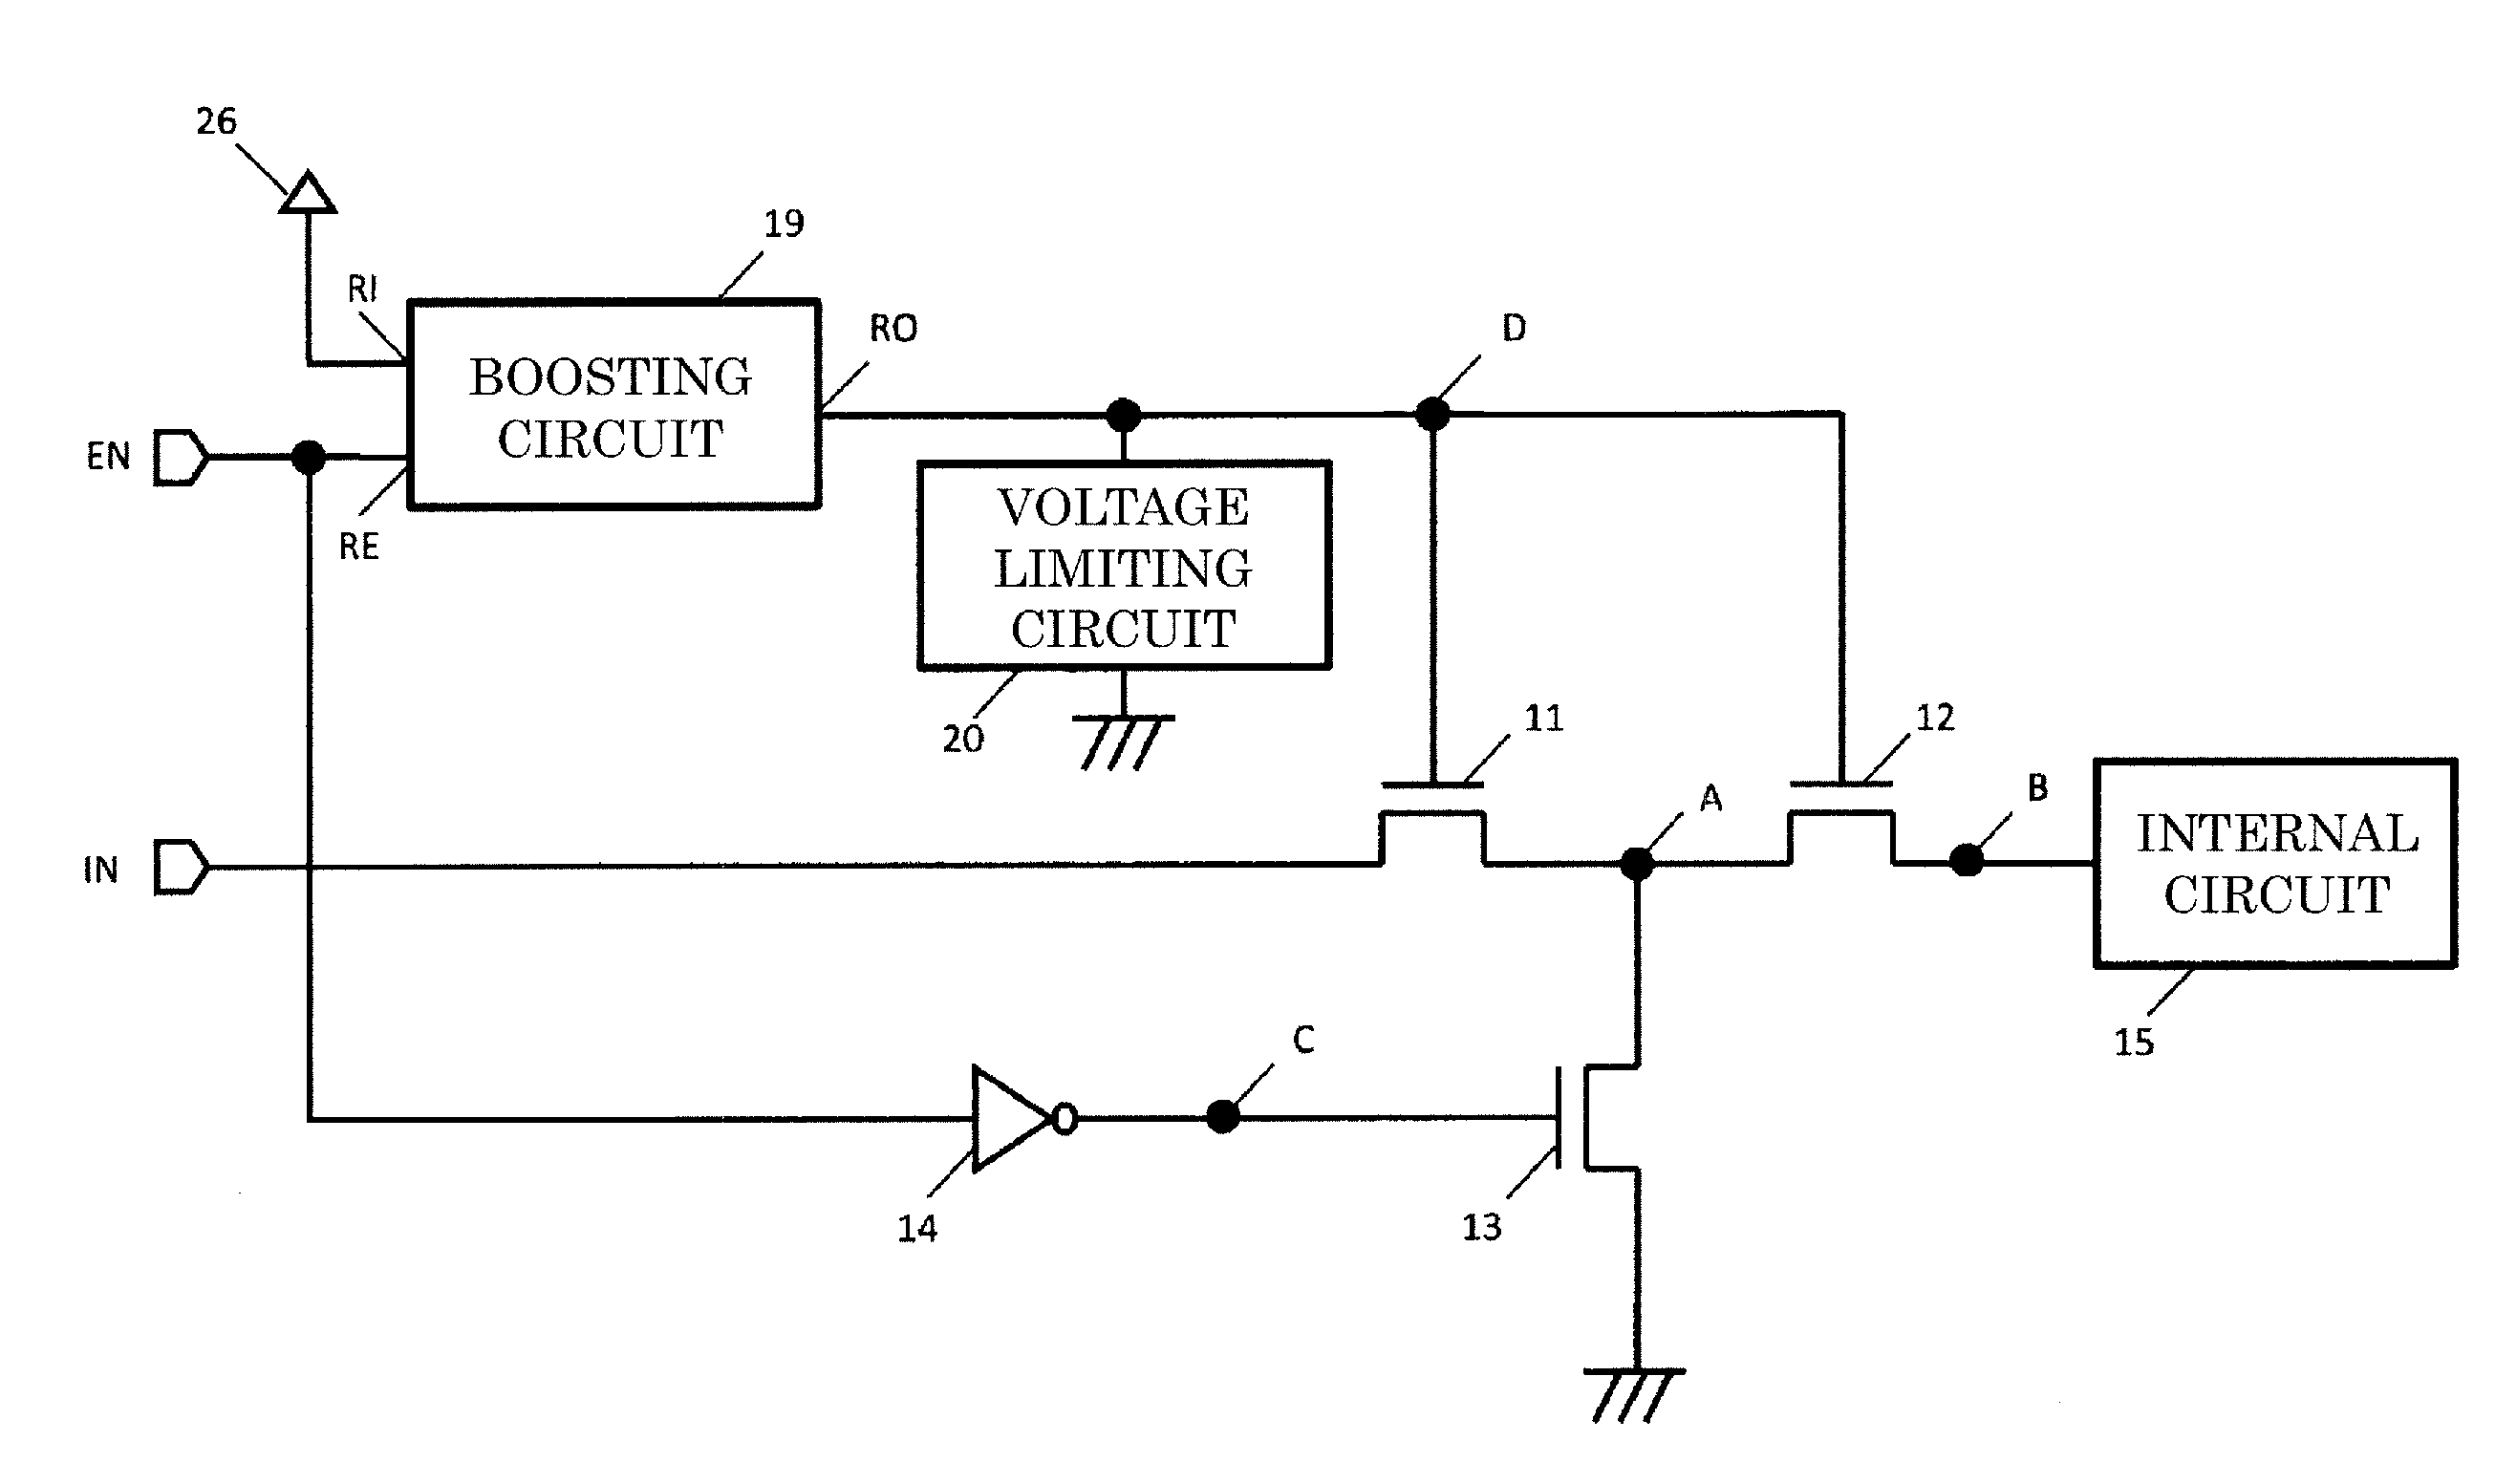 Switch circuit